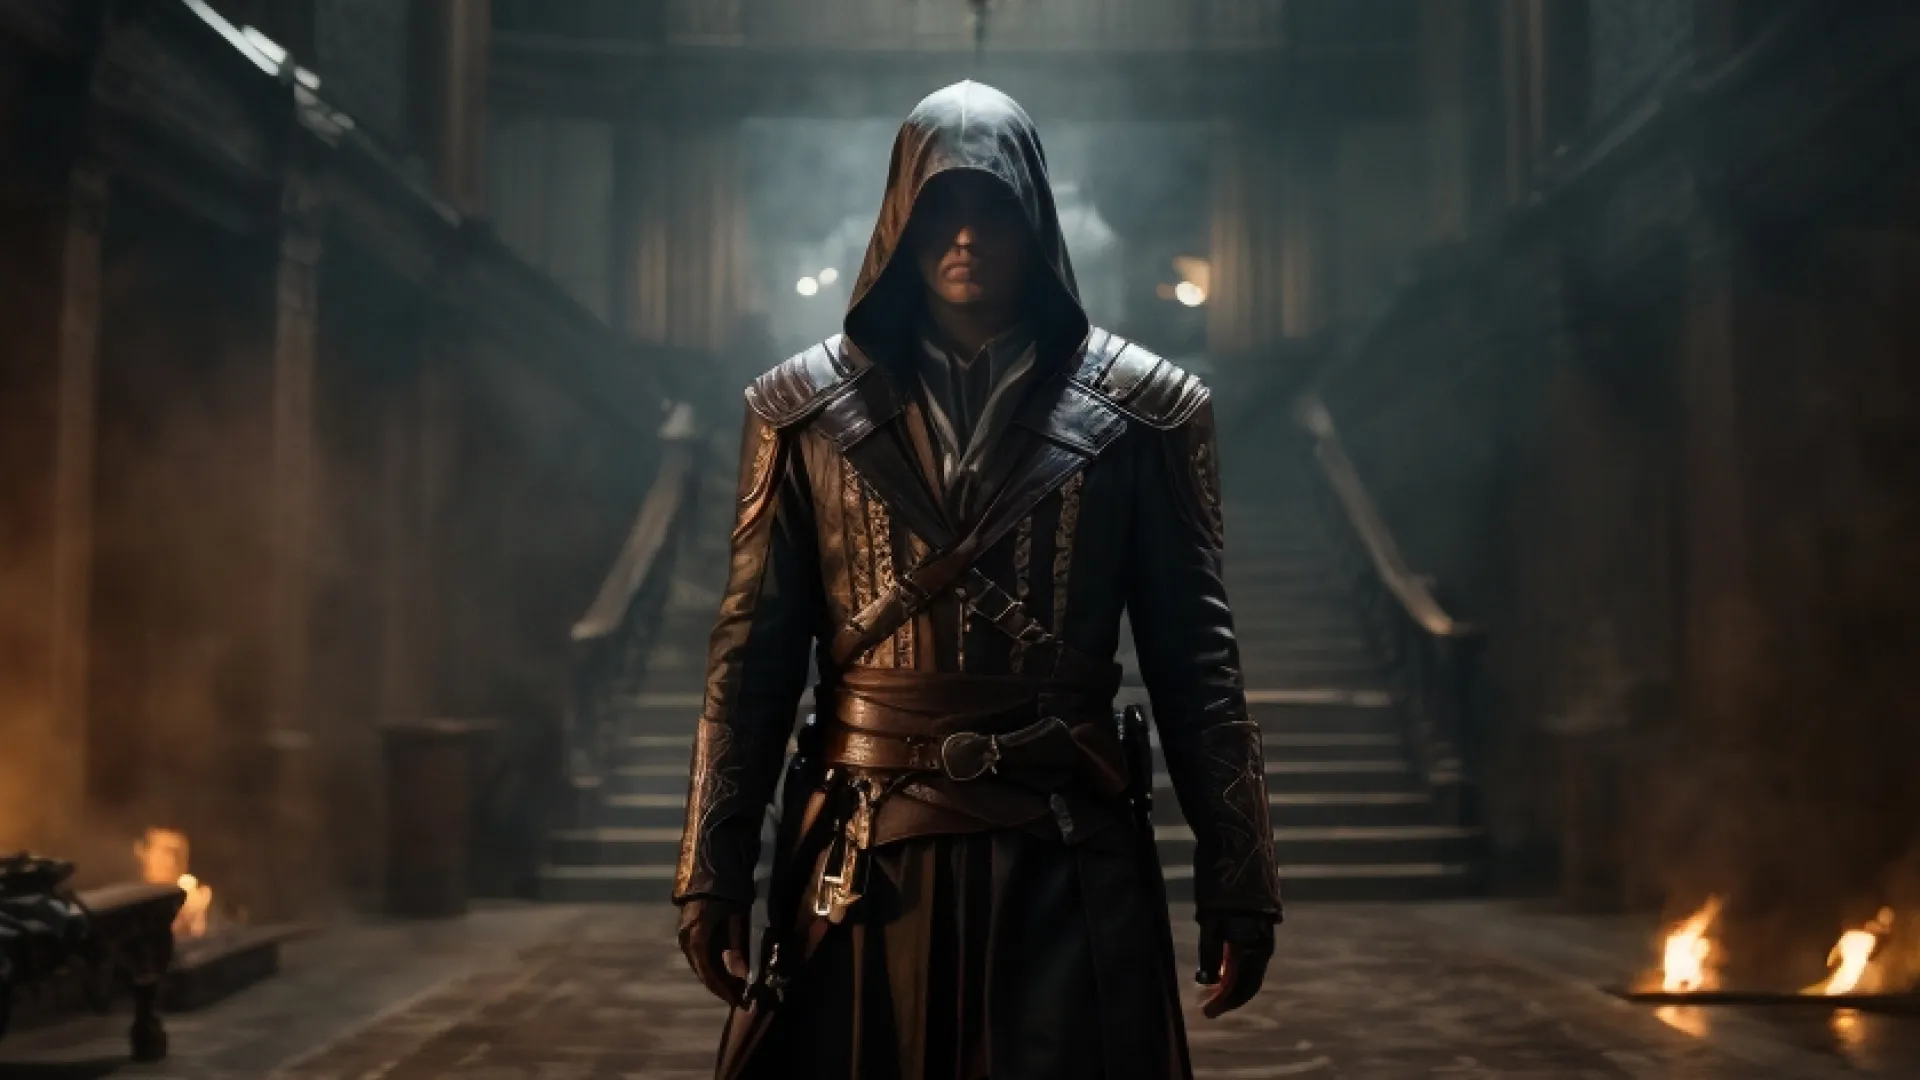 Episode 2: “Assassin’s Creed Valhalla: Dawn of Ragnarök”